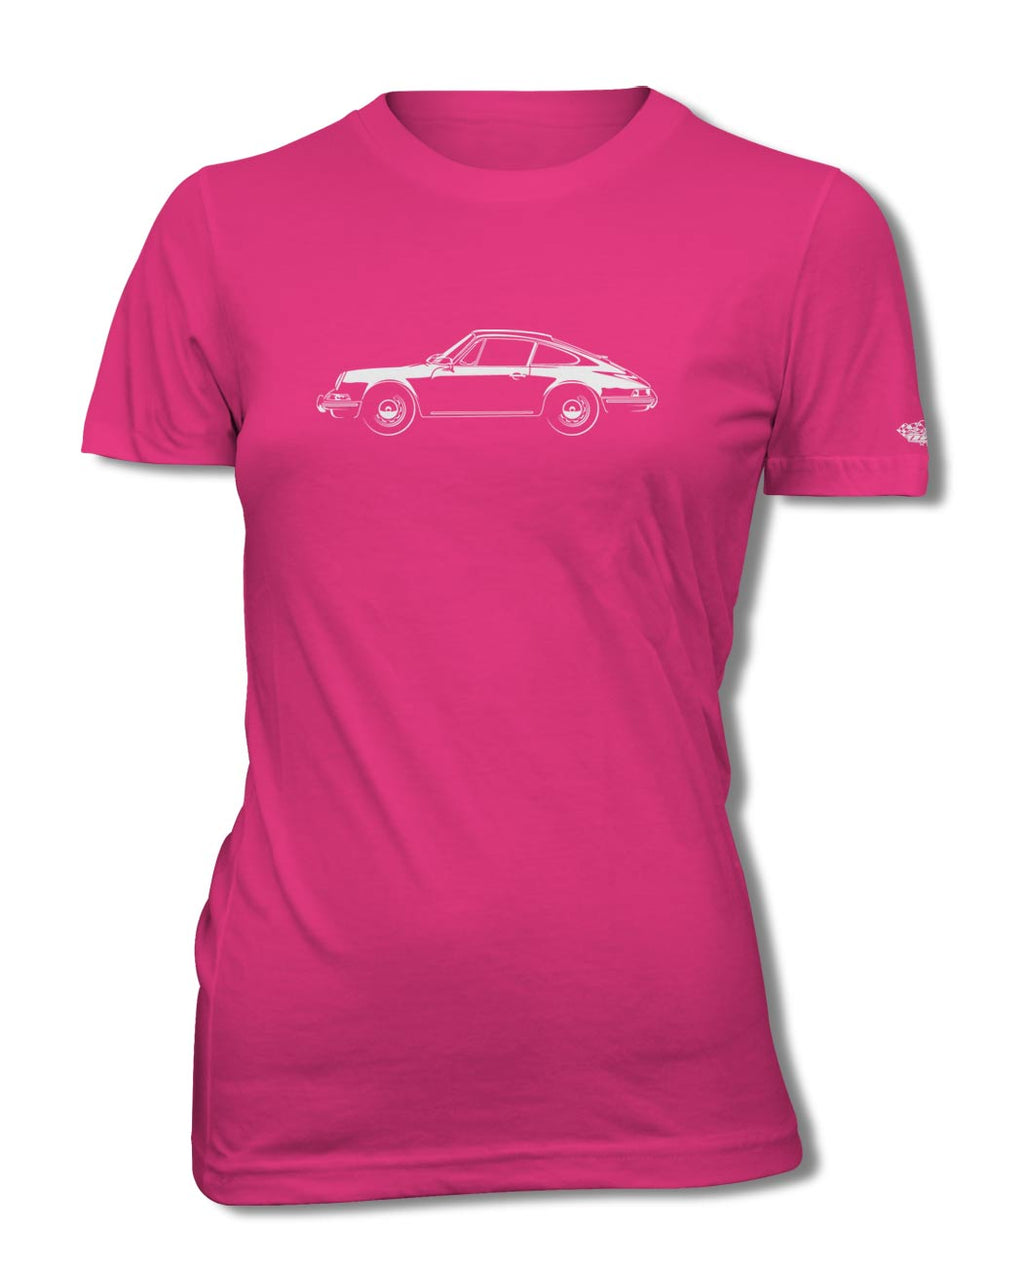 Porsche 912 Coupe T-Shirt - Women - Side View